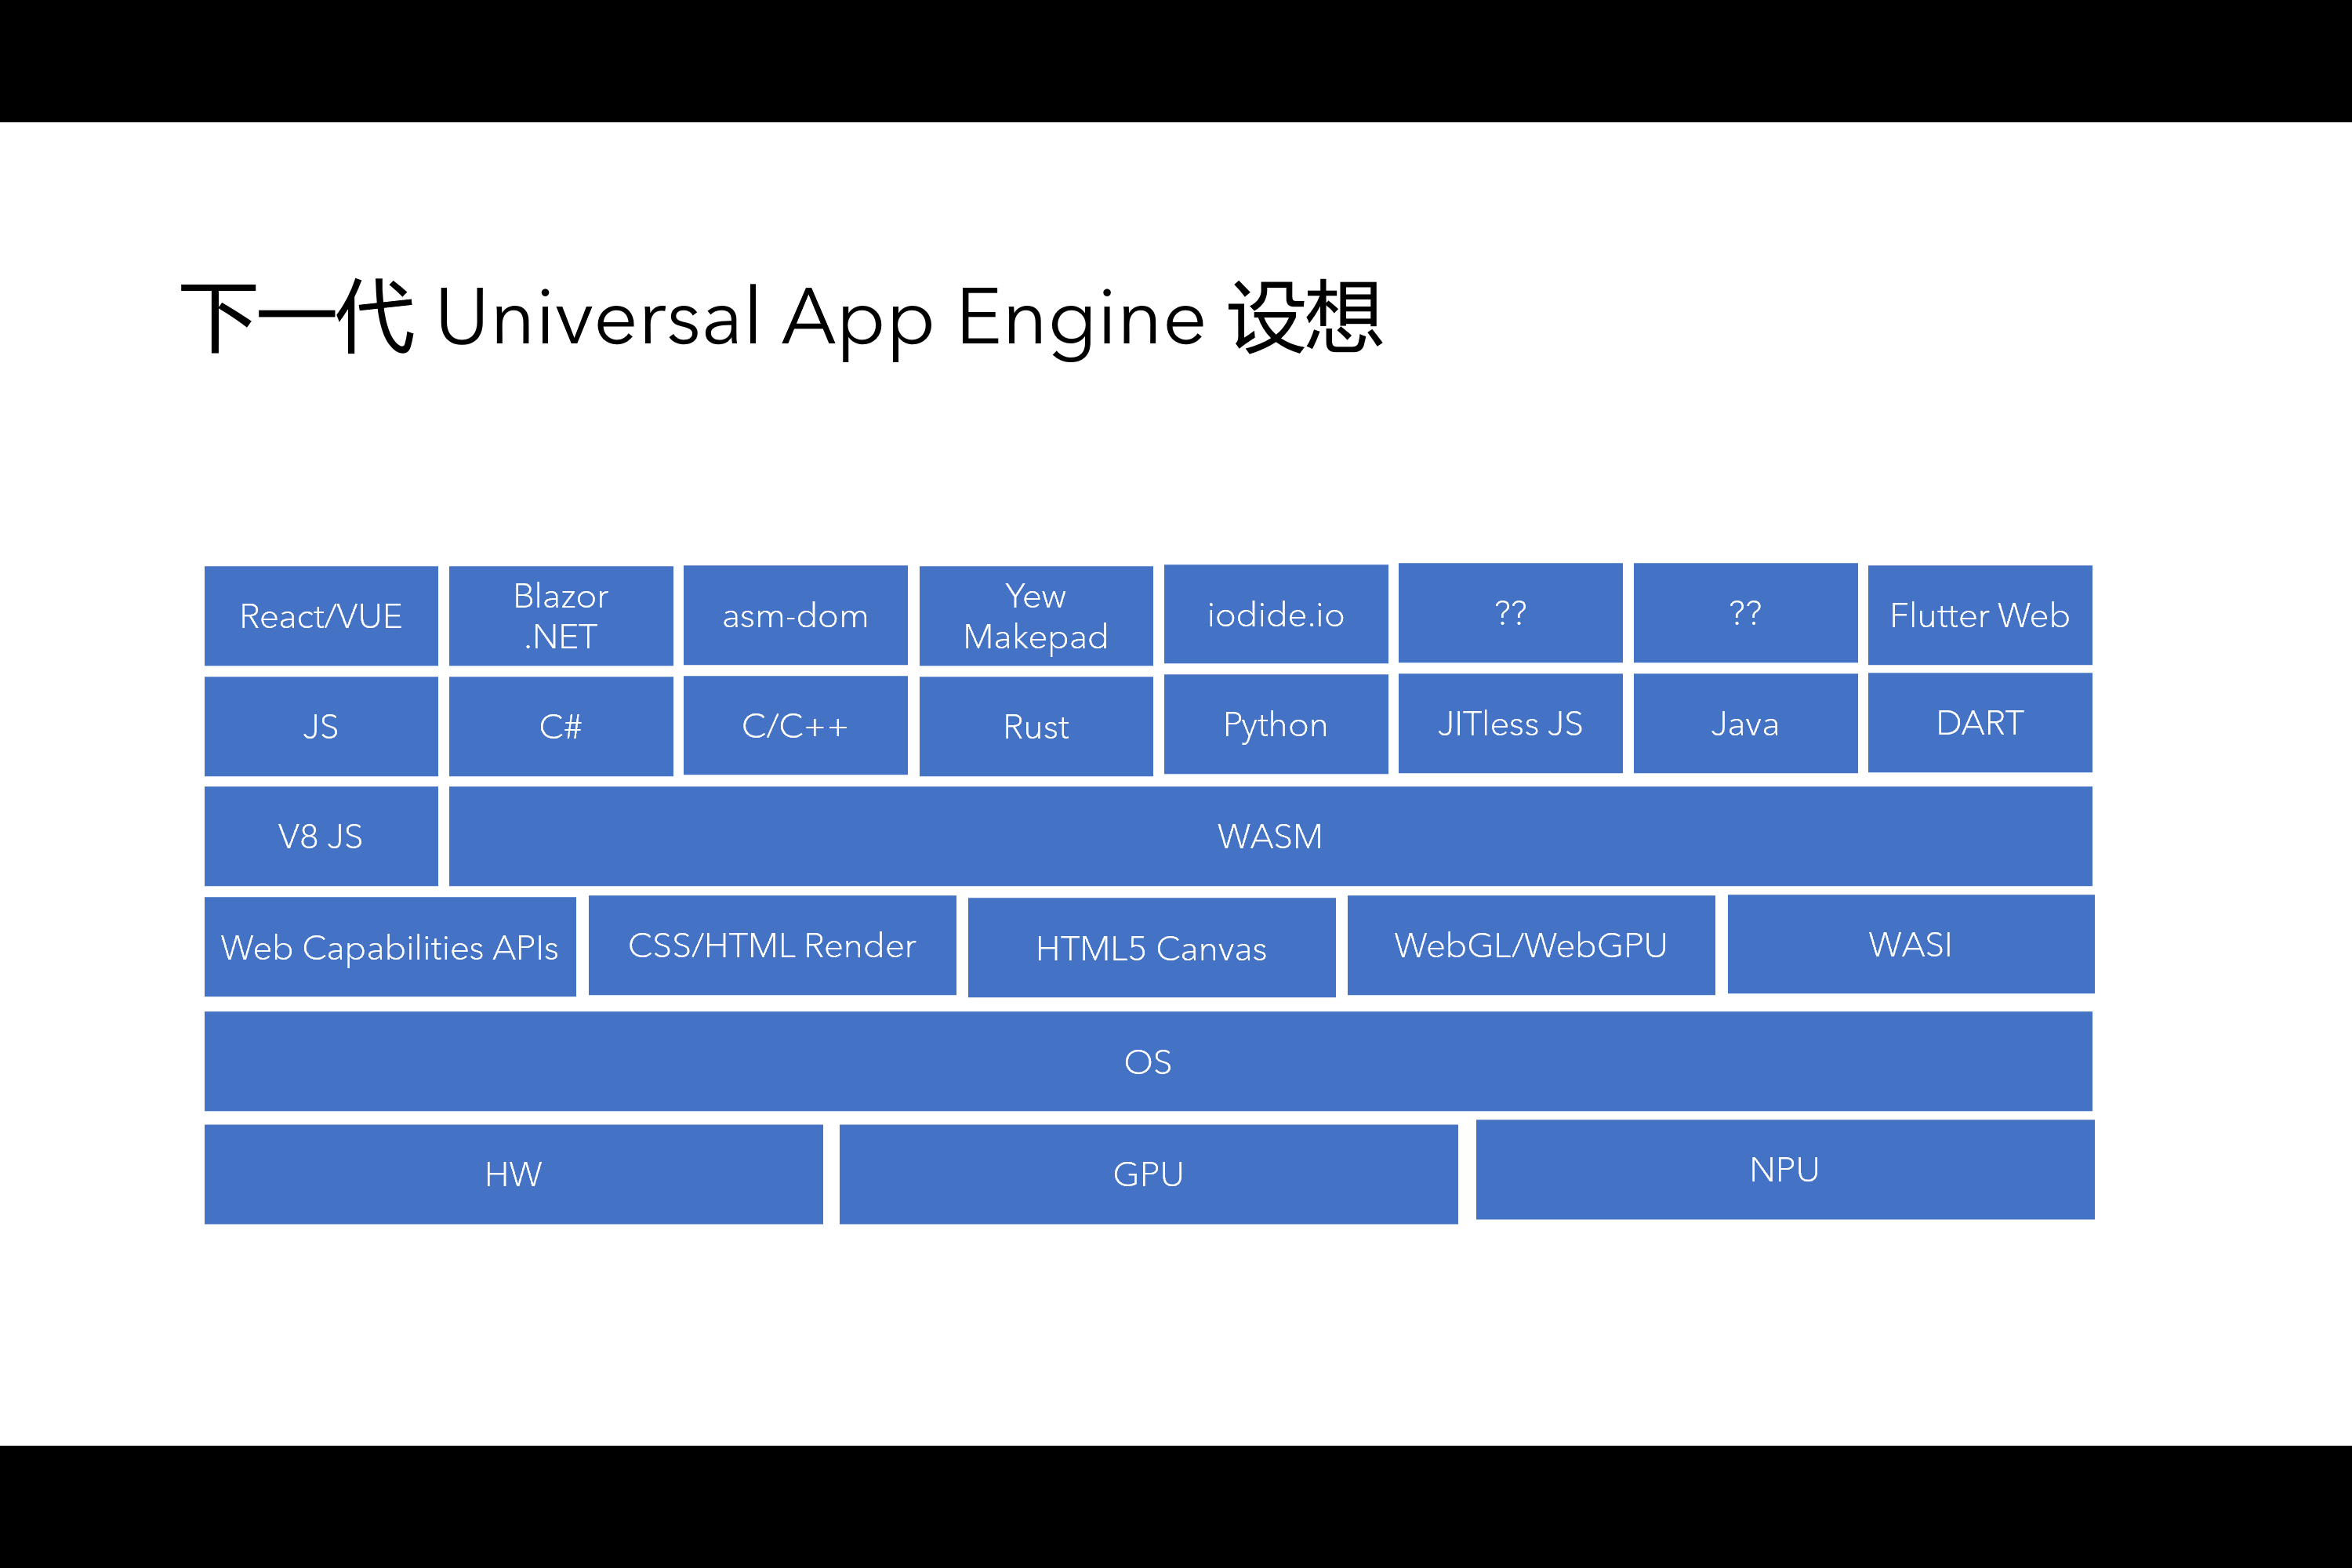 Universal App Engine